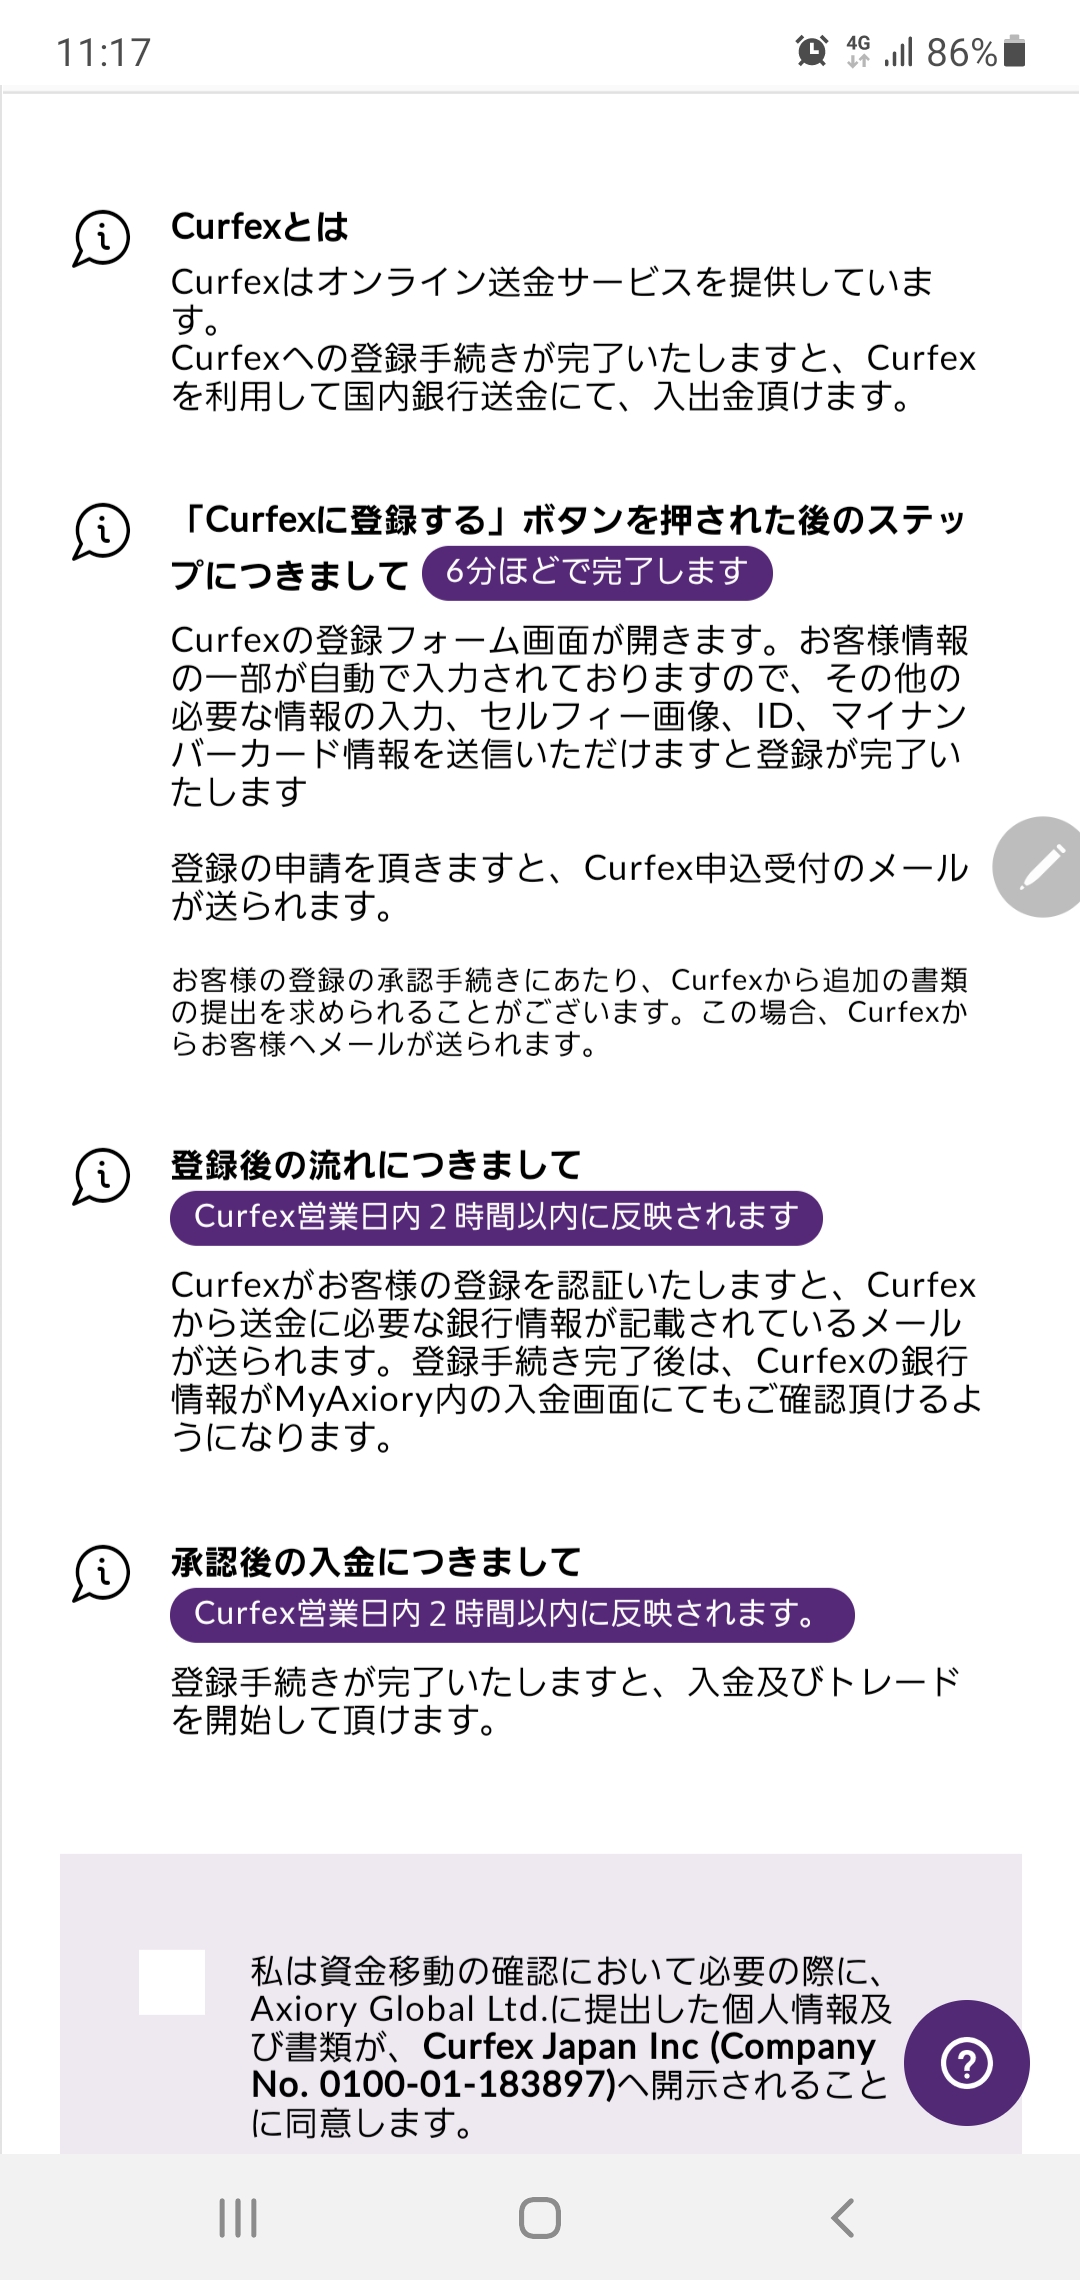 curfex(カーフェックス)とは、海外送金サービスで日本の金融庁にも登録されている安全性の高いマネーサービスオペレーターです。